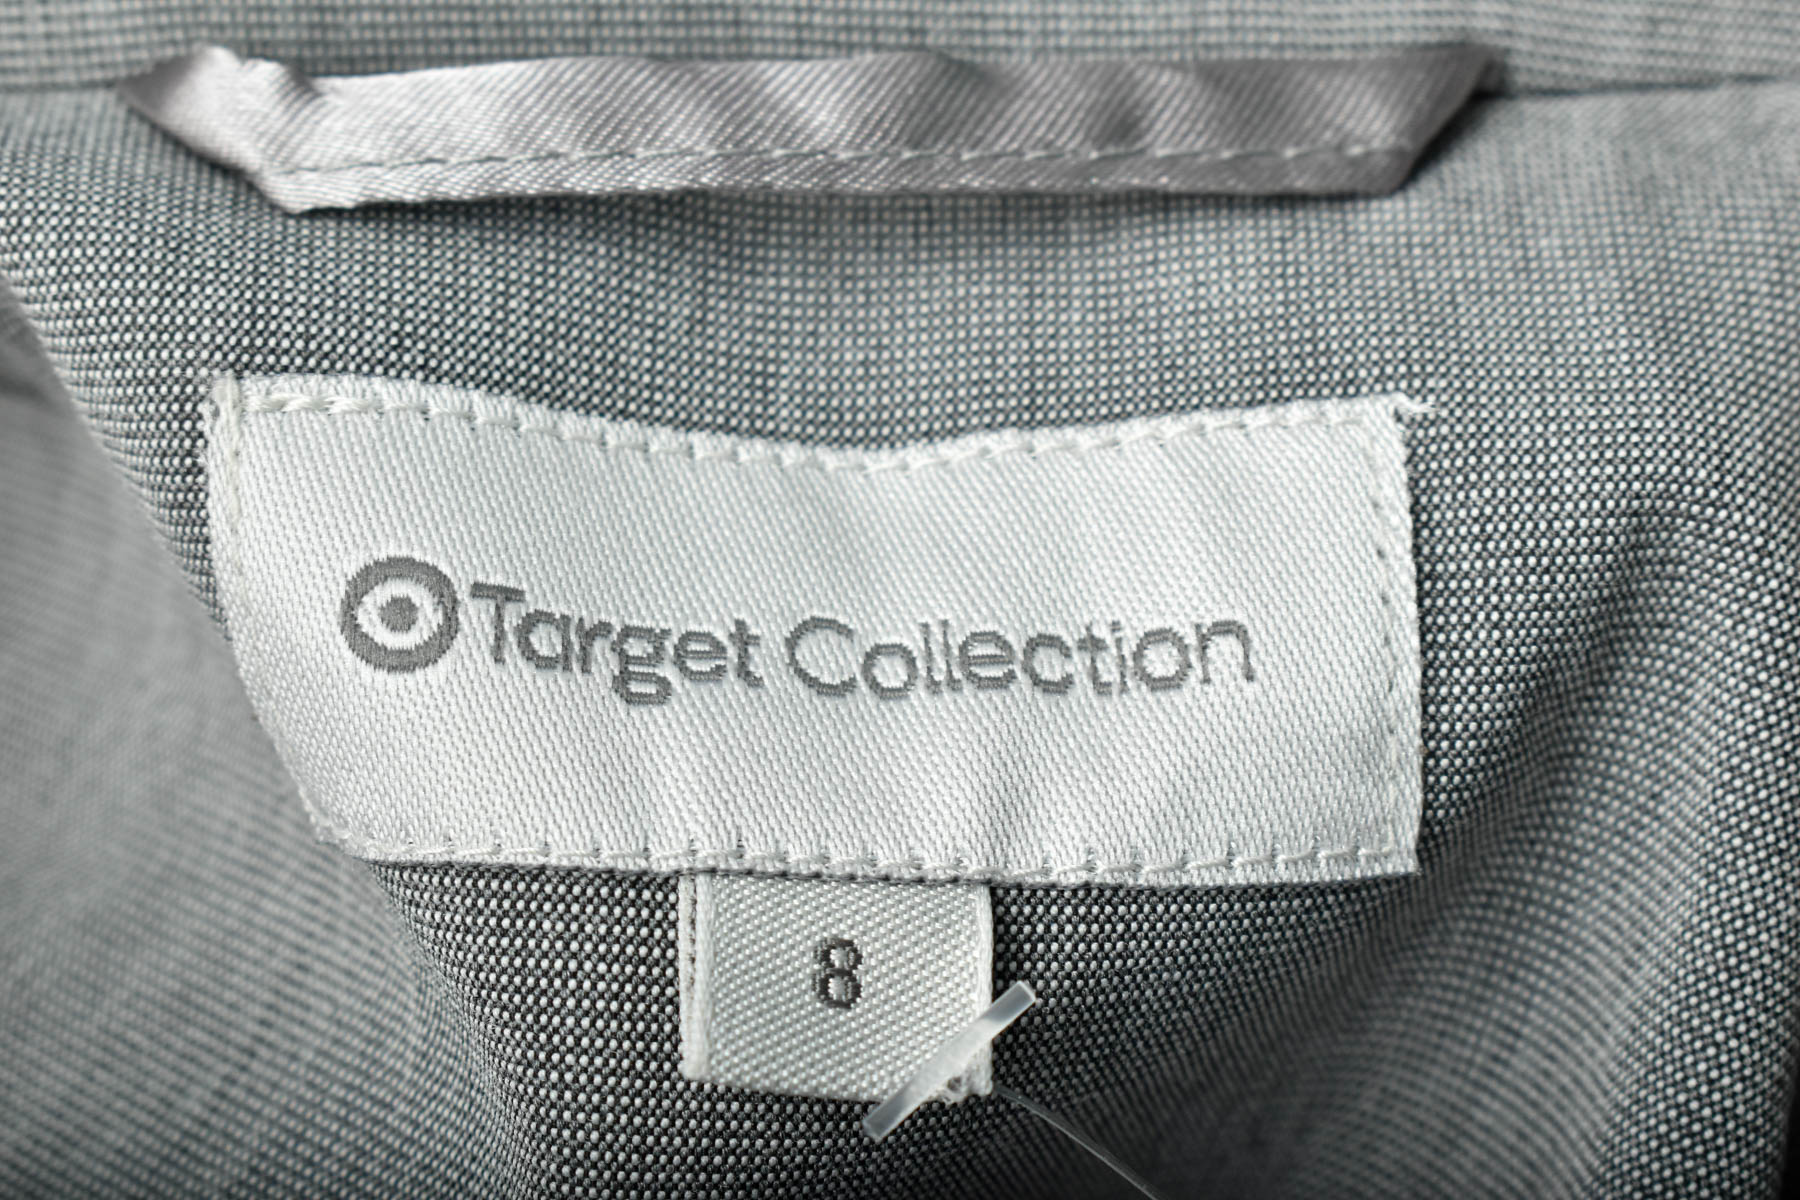 Women's blazer - Target Collection - 2